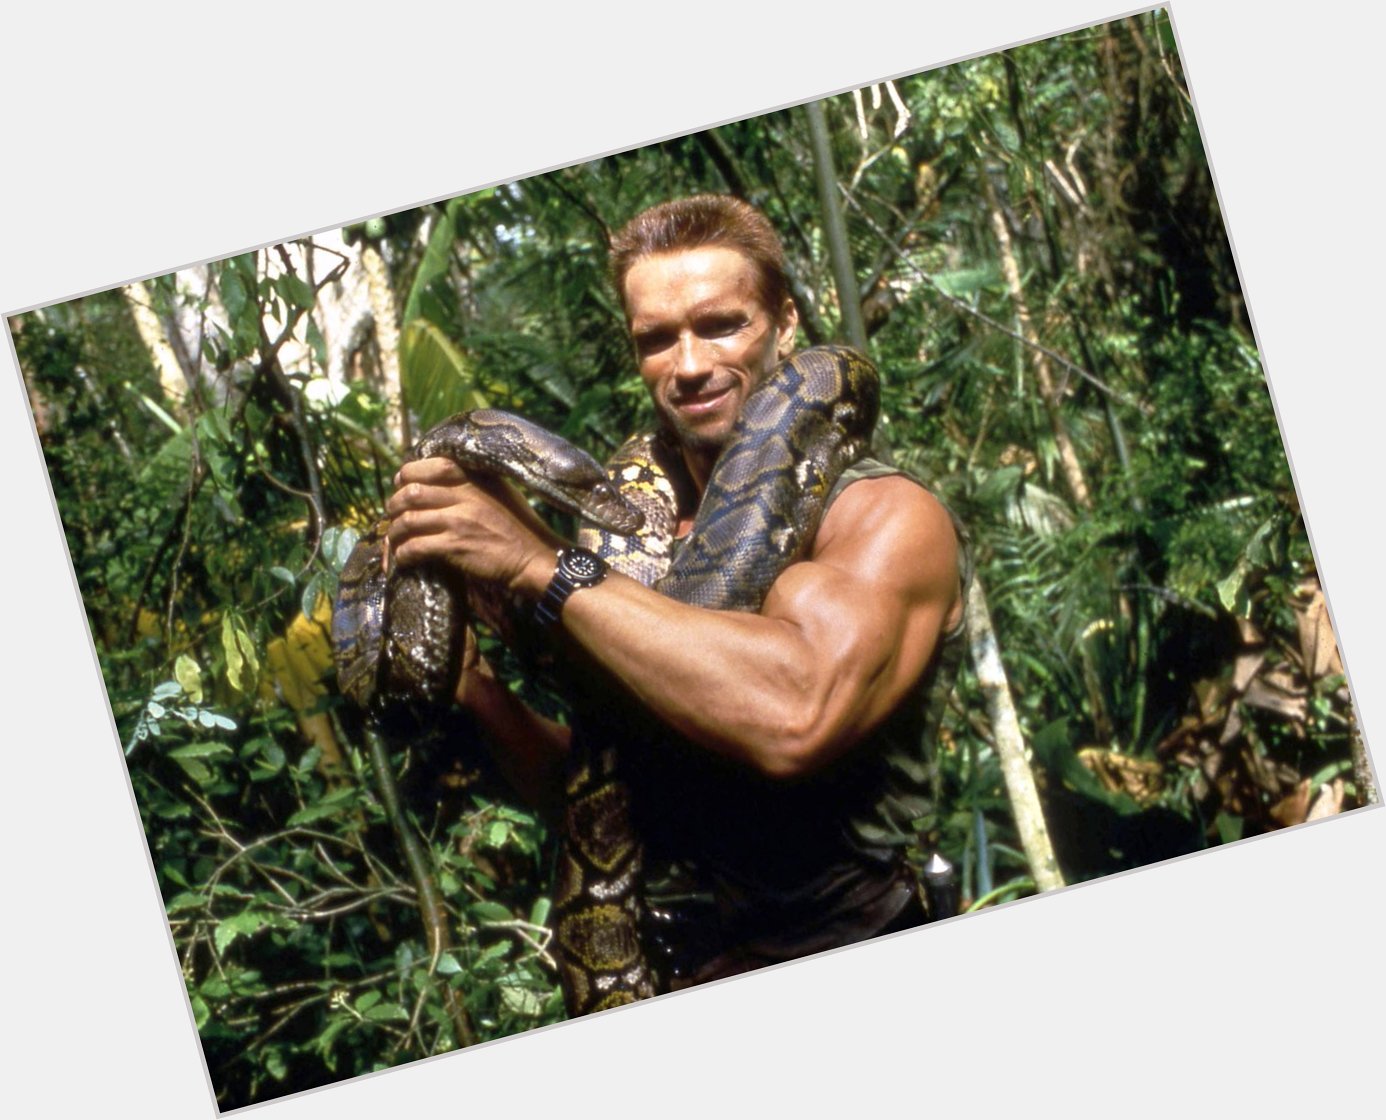 Happy birthday to the PREDATOR hunter himself, Arnold 